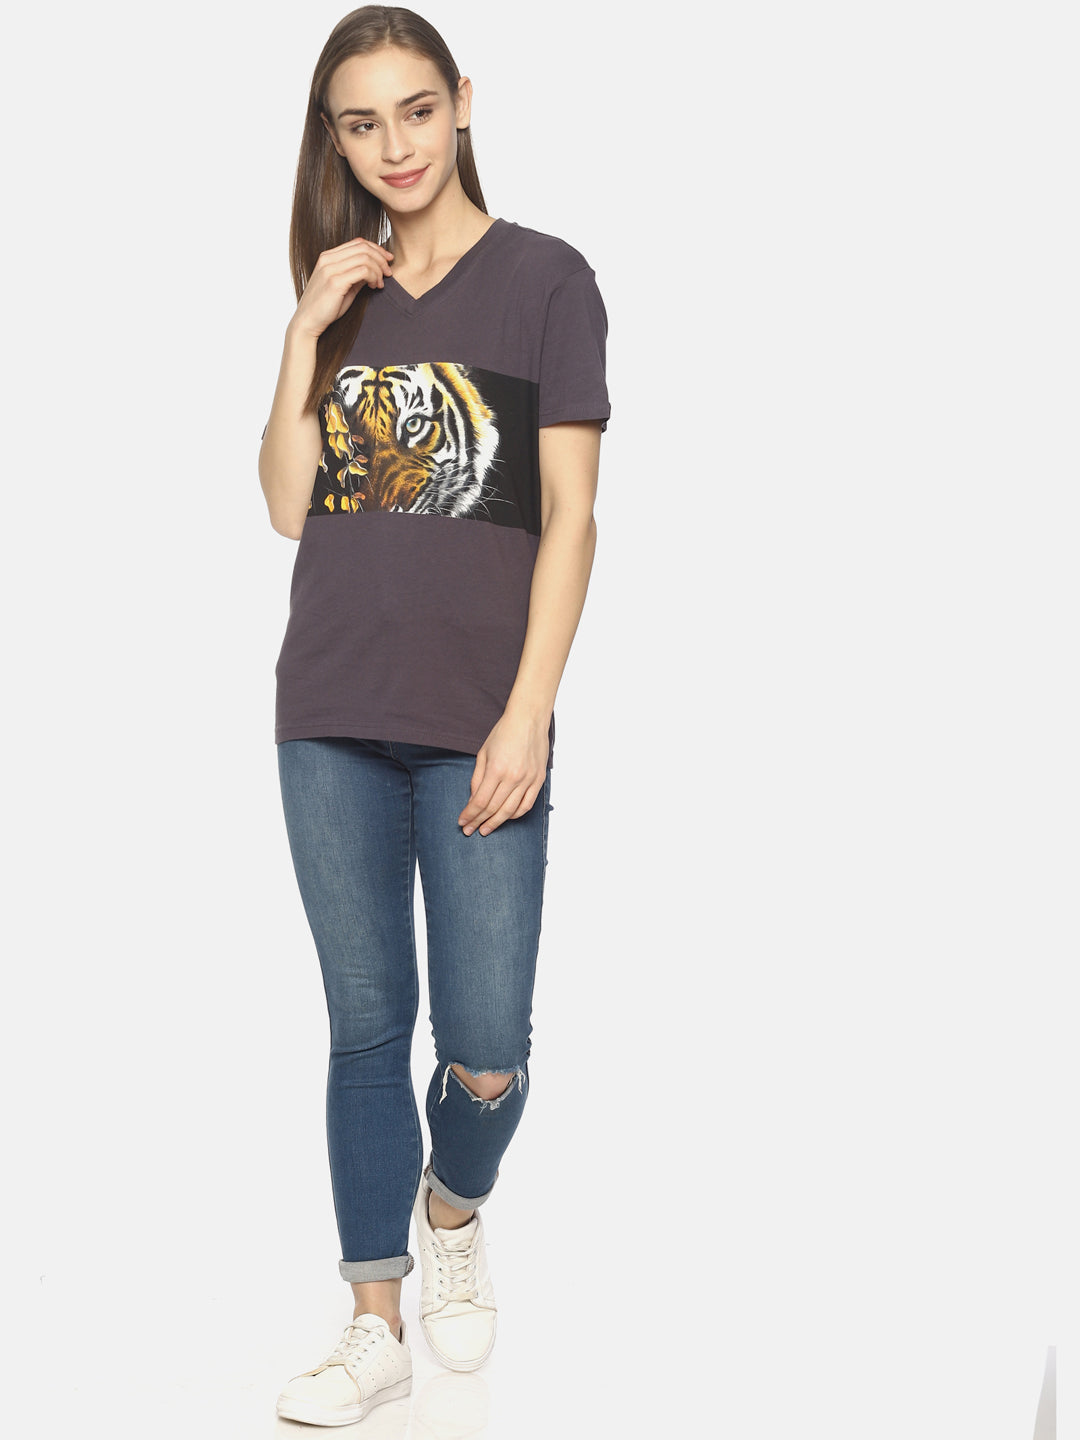 Wolfpack Tiger Eyes with Leaves Dark Grey Printed Women T-Shirt